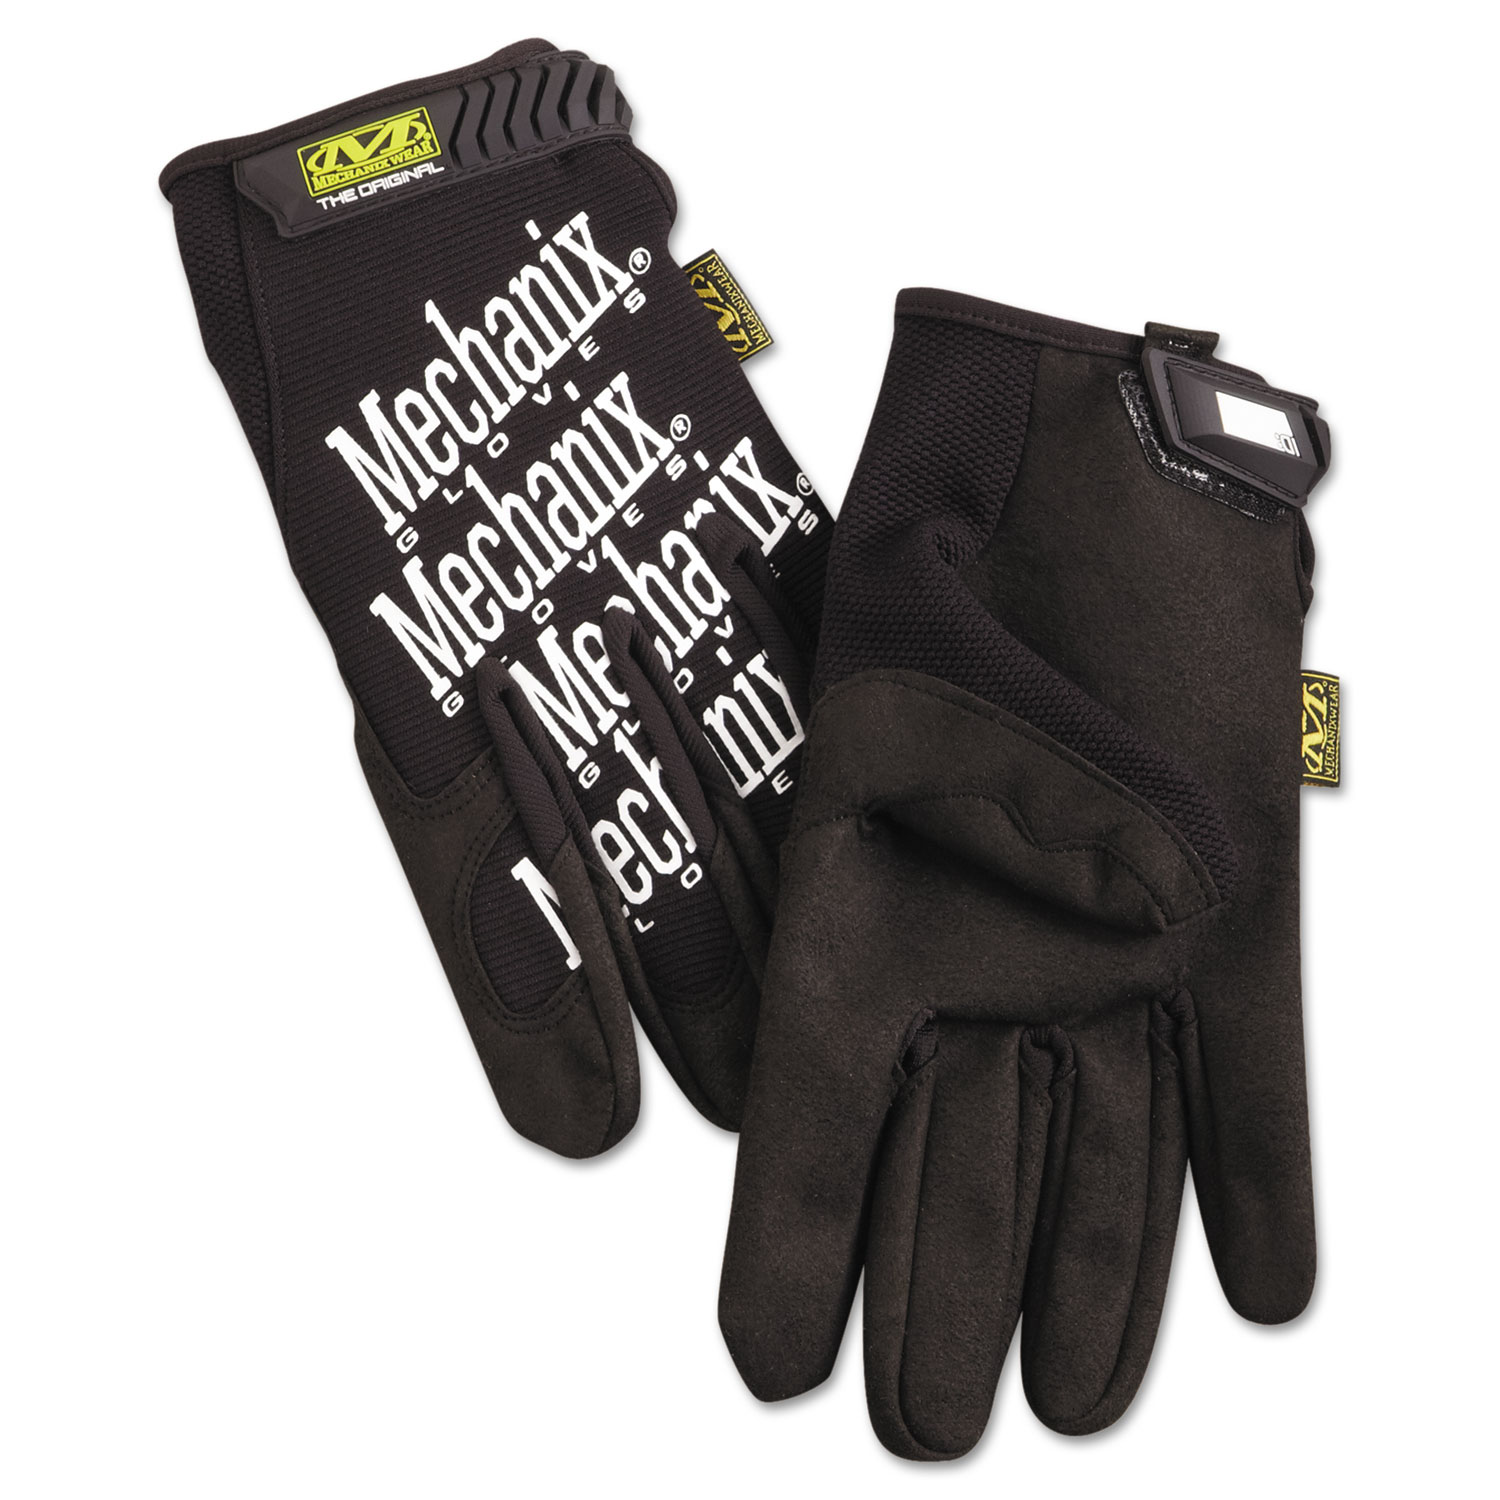  Mechanix Wear MG-05-012 The Original Work Gloves, Black, 2X-Large (MNXMG05012) 